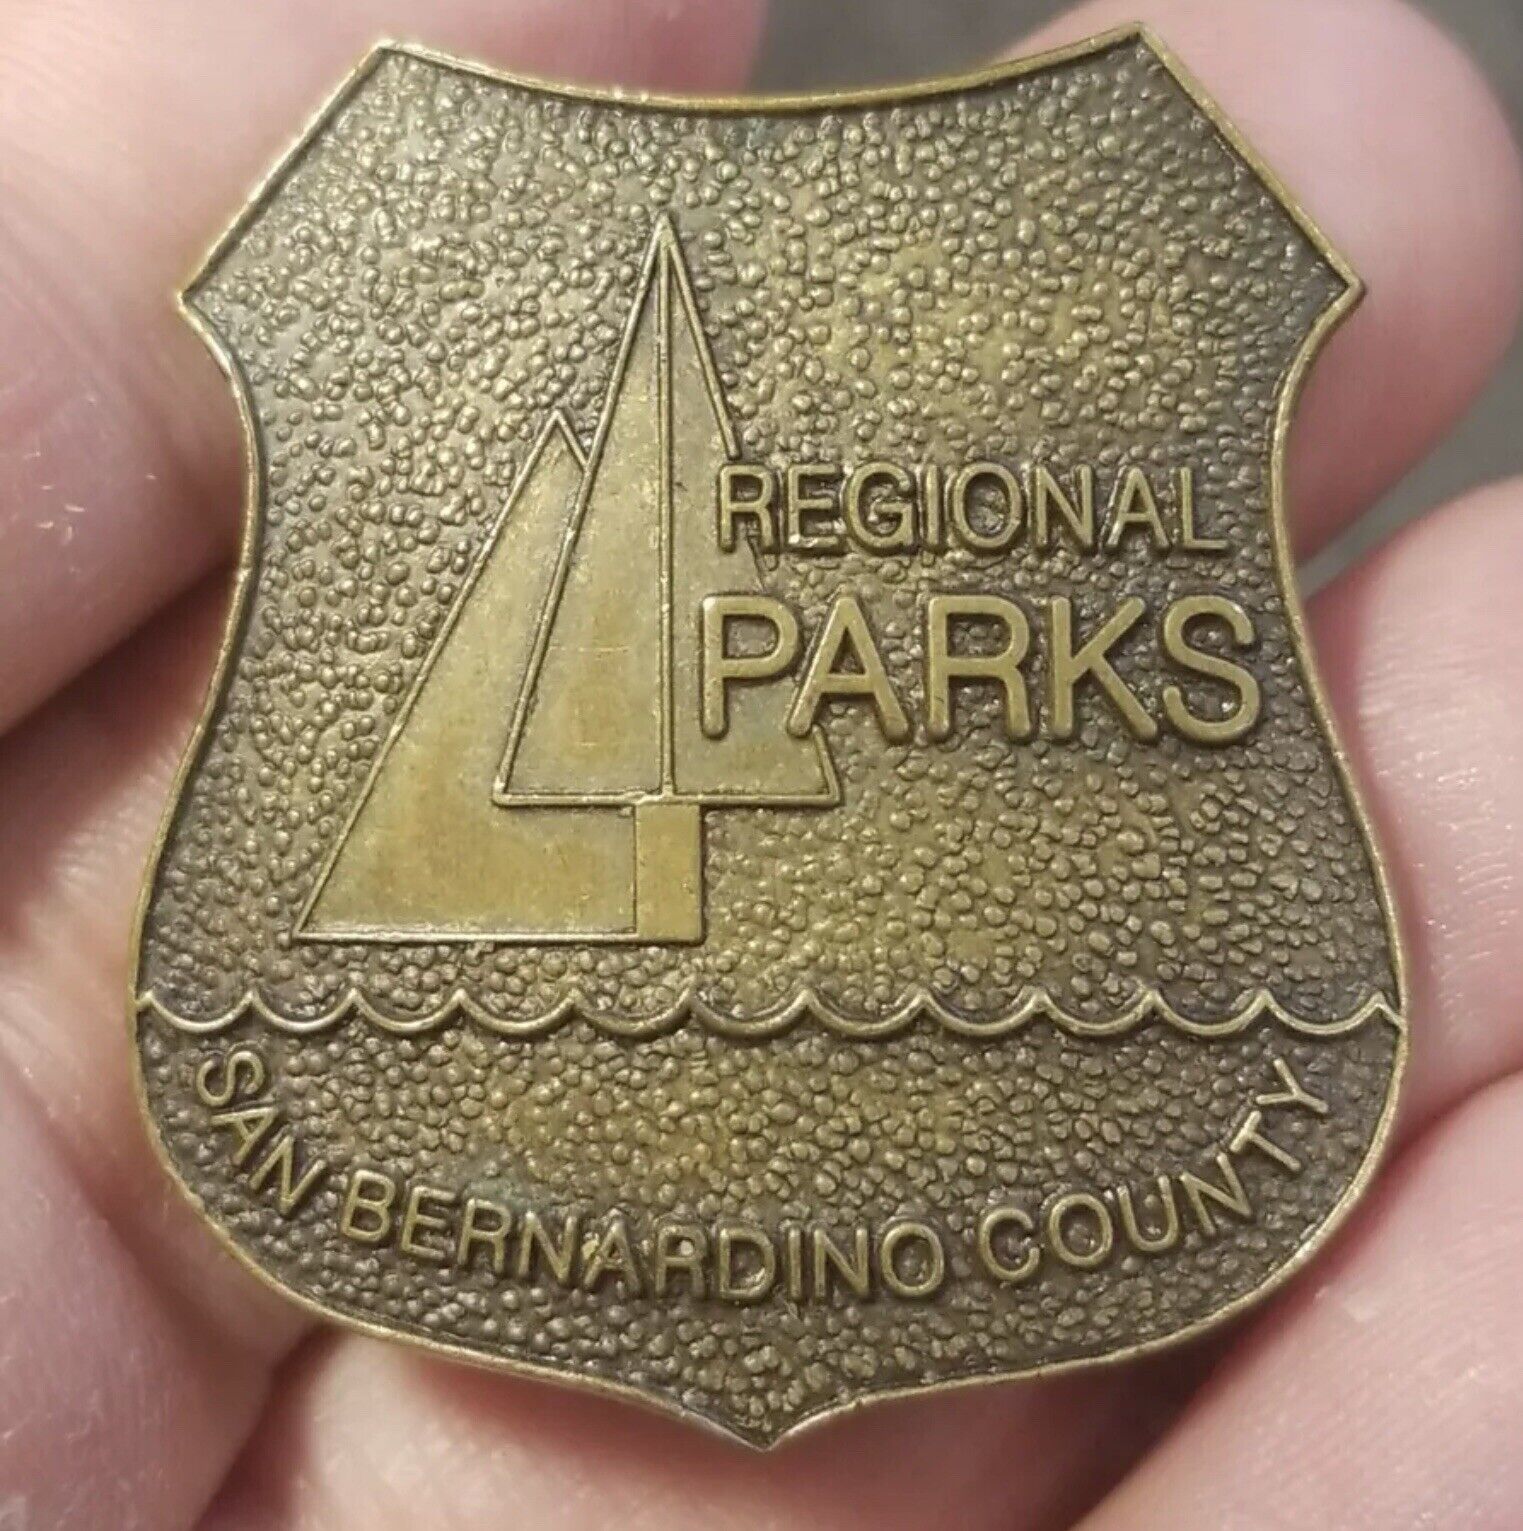 San Bernardino County California Regional Parks Badge